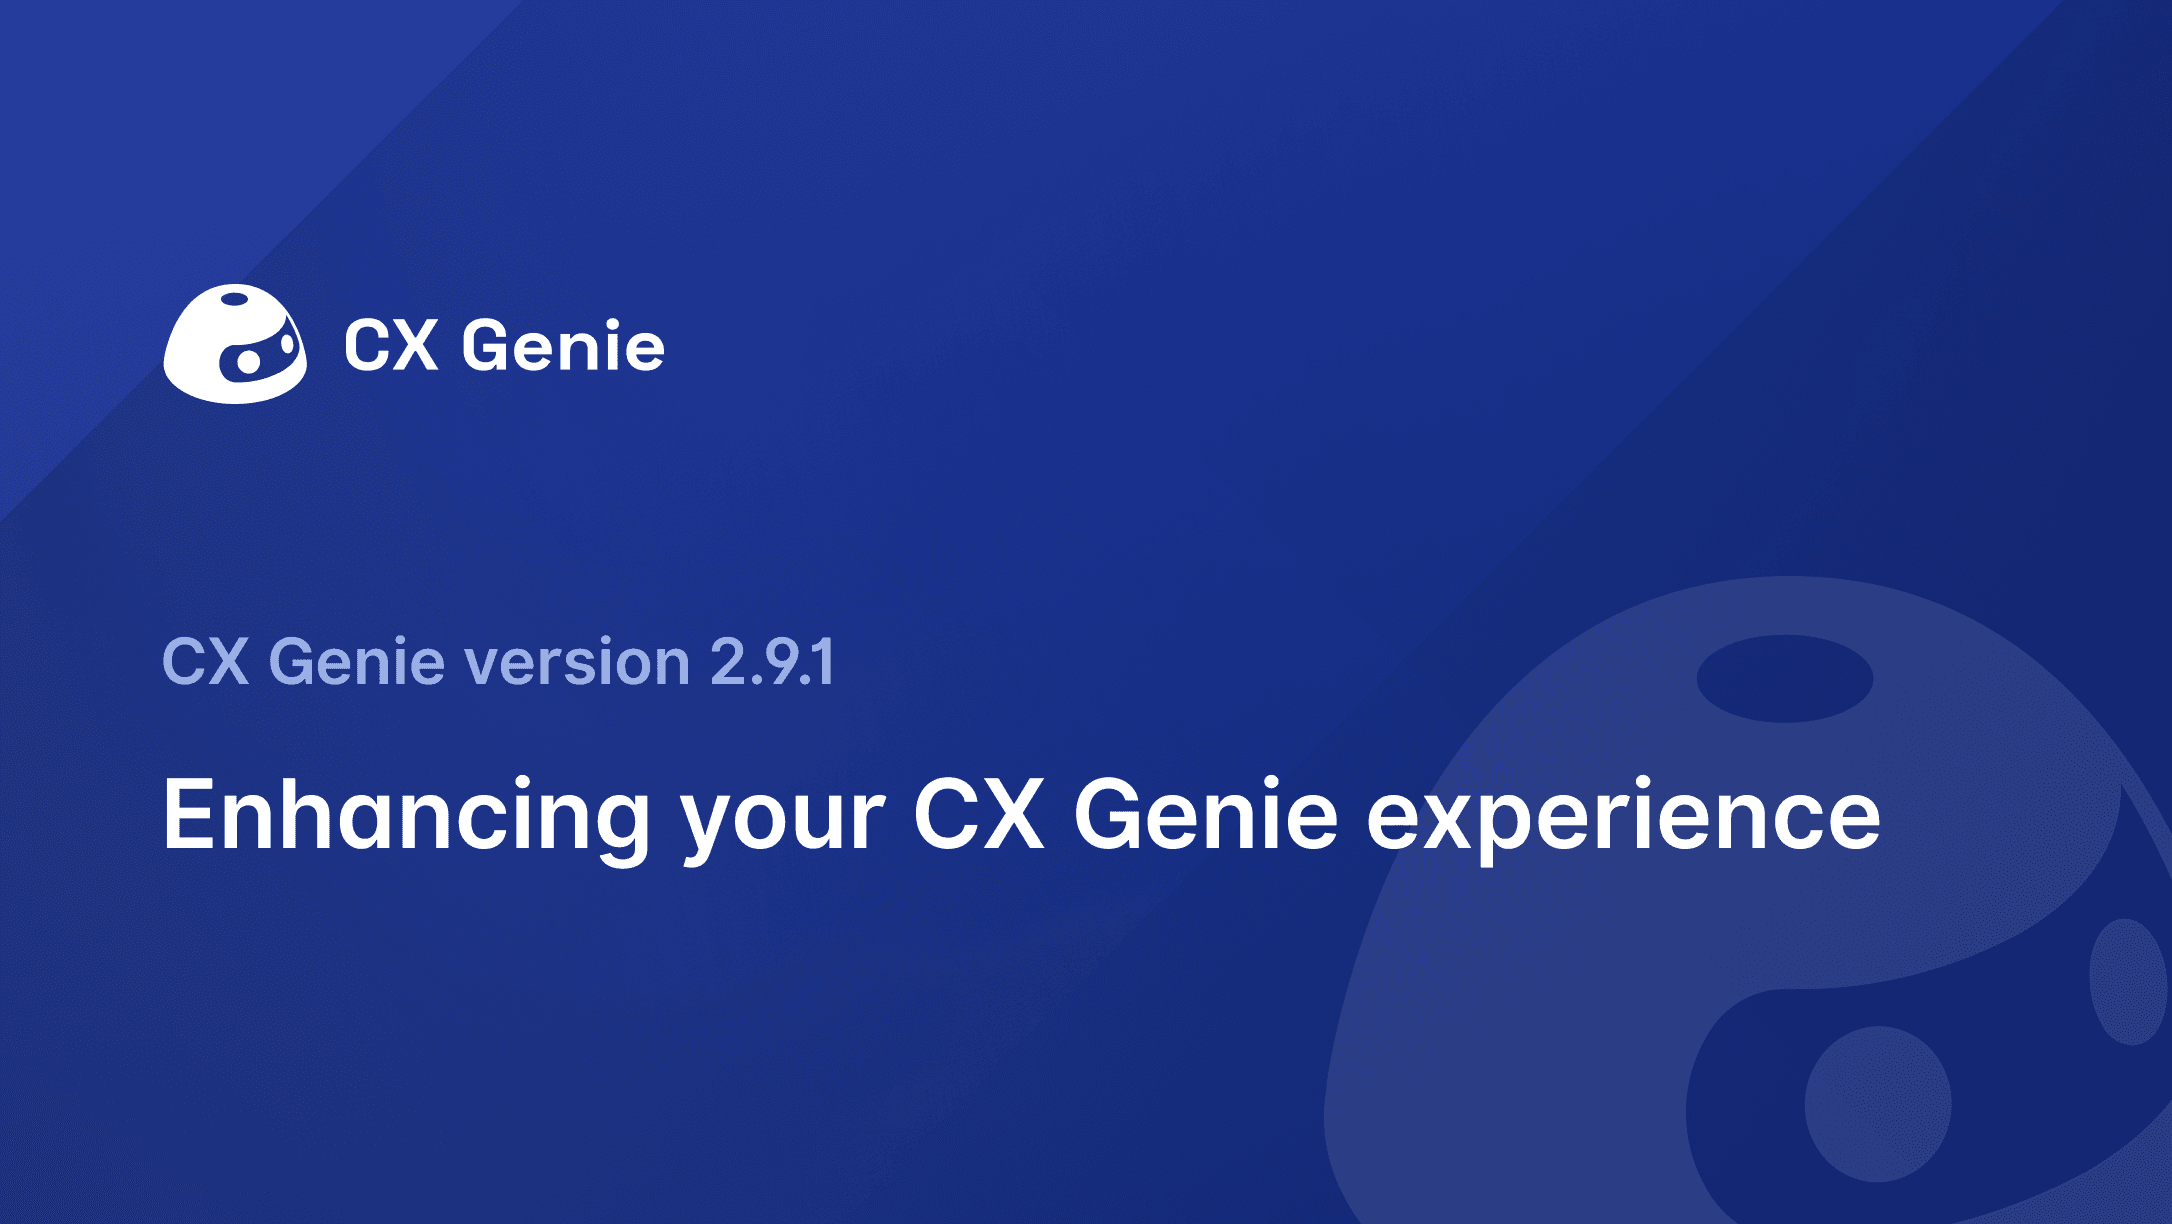 CX Genie Version 2.9.1: Enhancing your CX Genie experience